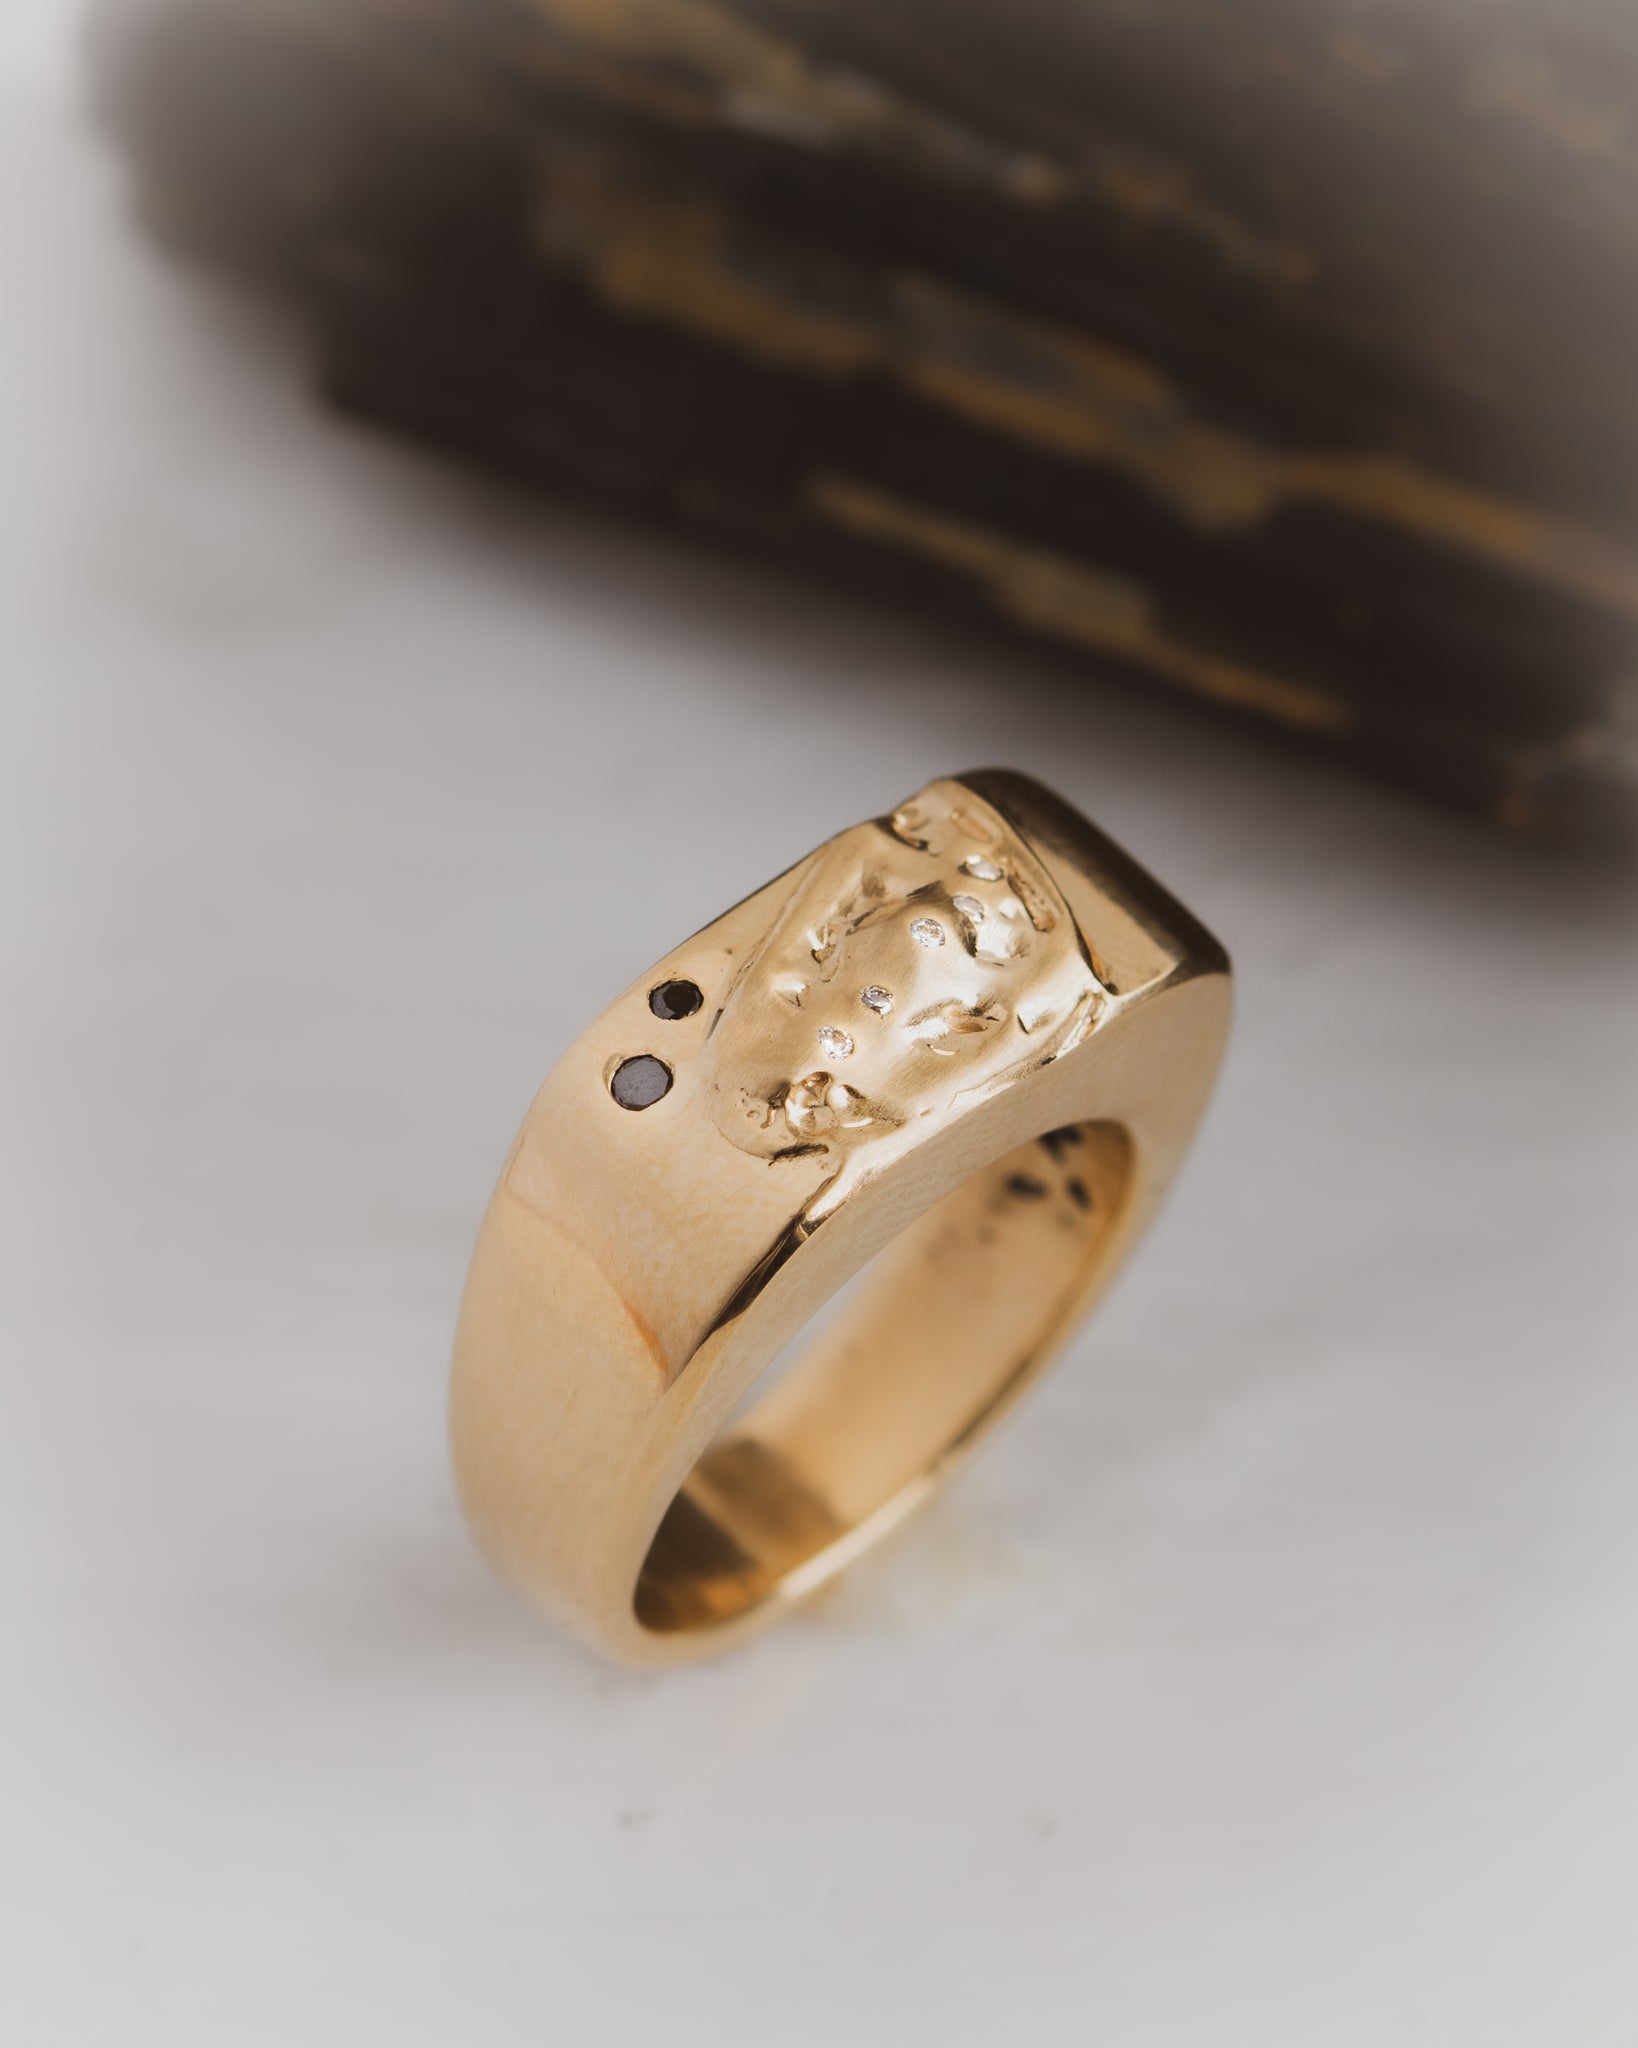 Celestial Dreams - 14K Gold, Meteorite and Diamond Ring